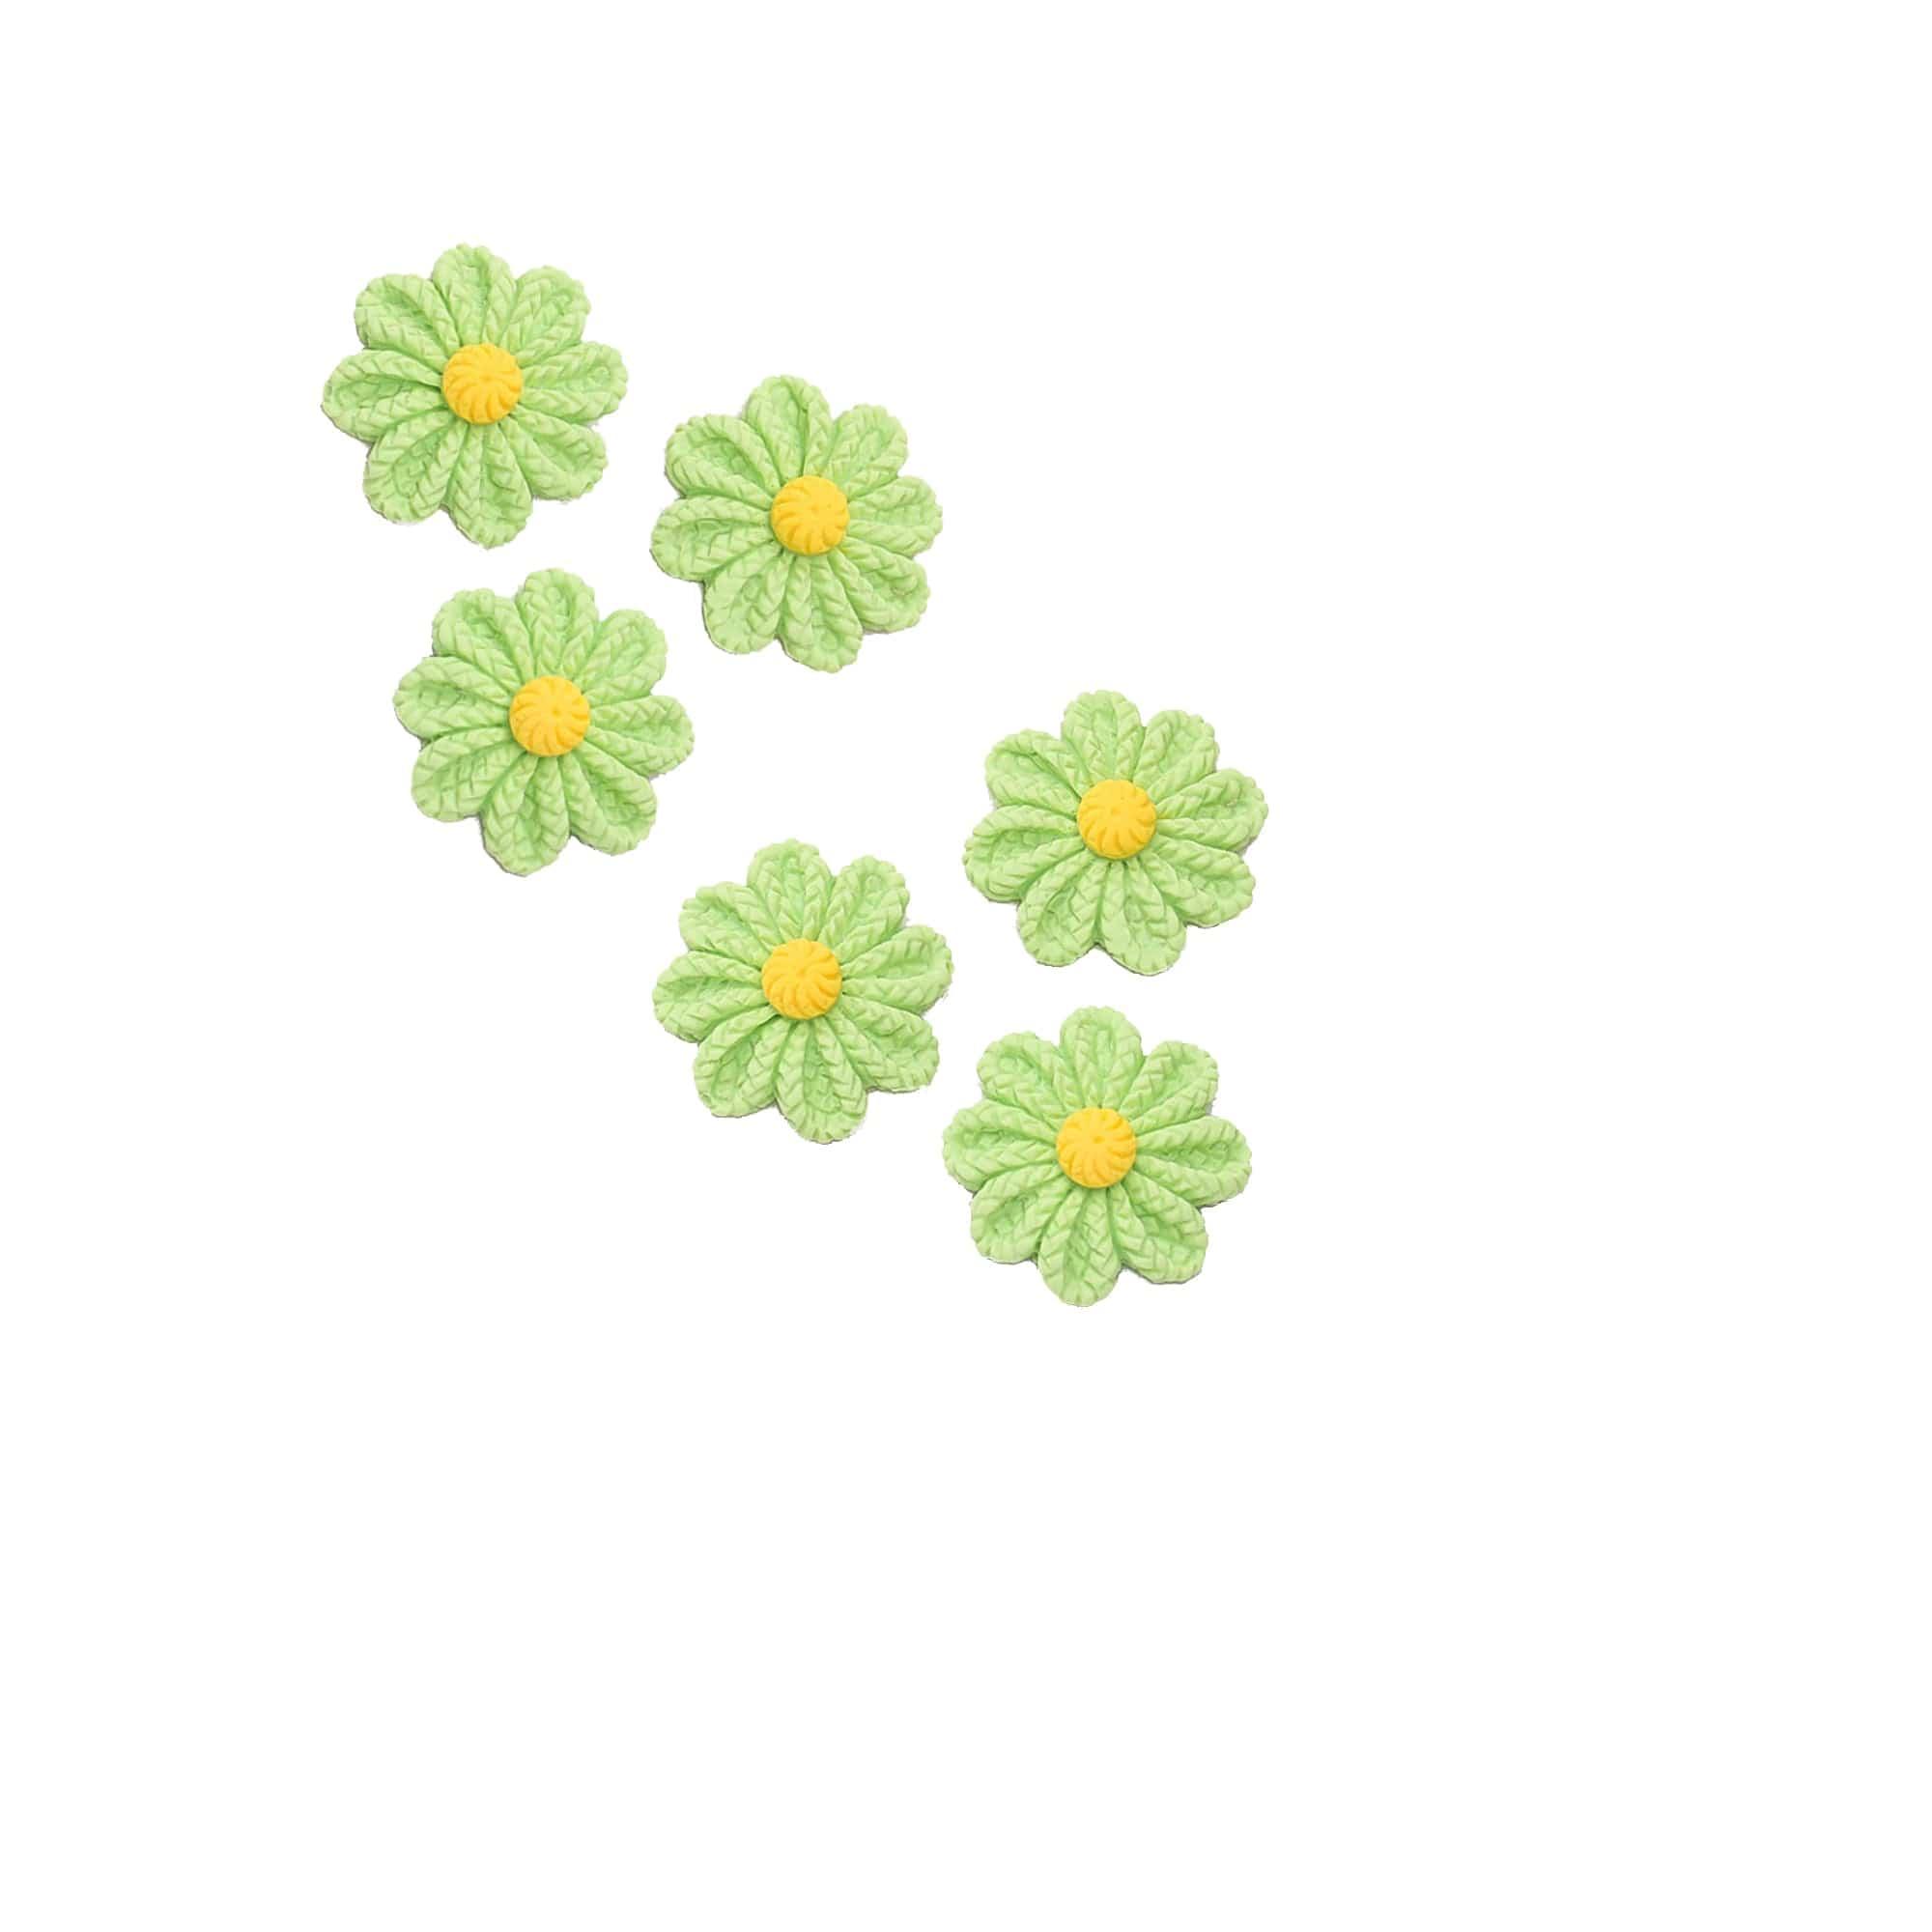 Flower Fun Collection Pastel Green Flower Flatback Scrapbook Buttons by SSC Designs - Pkg. of 5 - Scrapbook Supply Companies